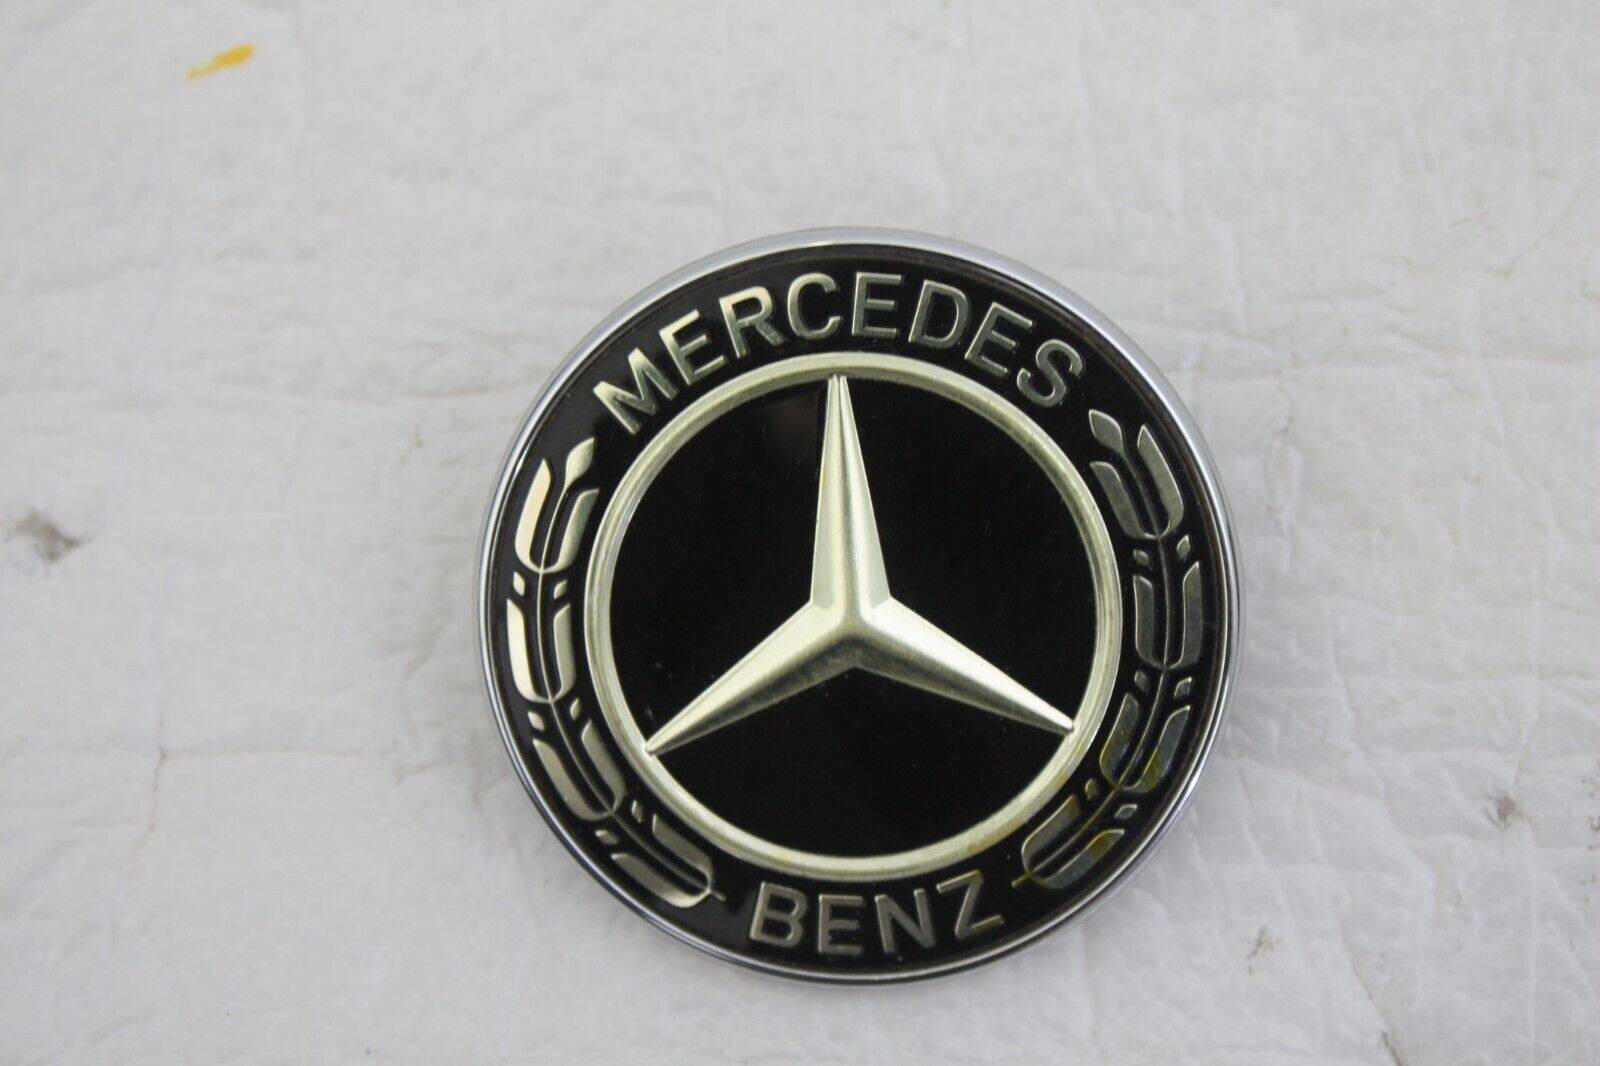 Mercedes A Class W177 Front Emblem Badge A0008178501 Genuine 176400243854